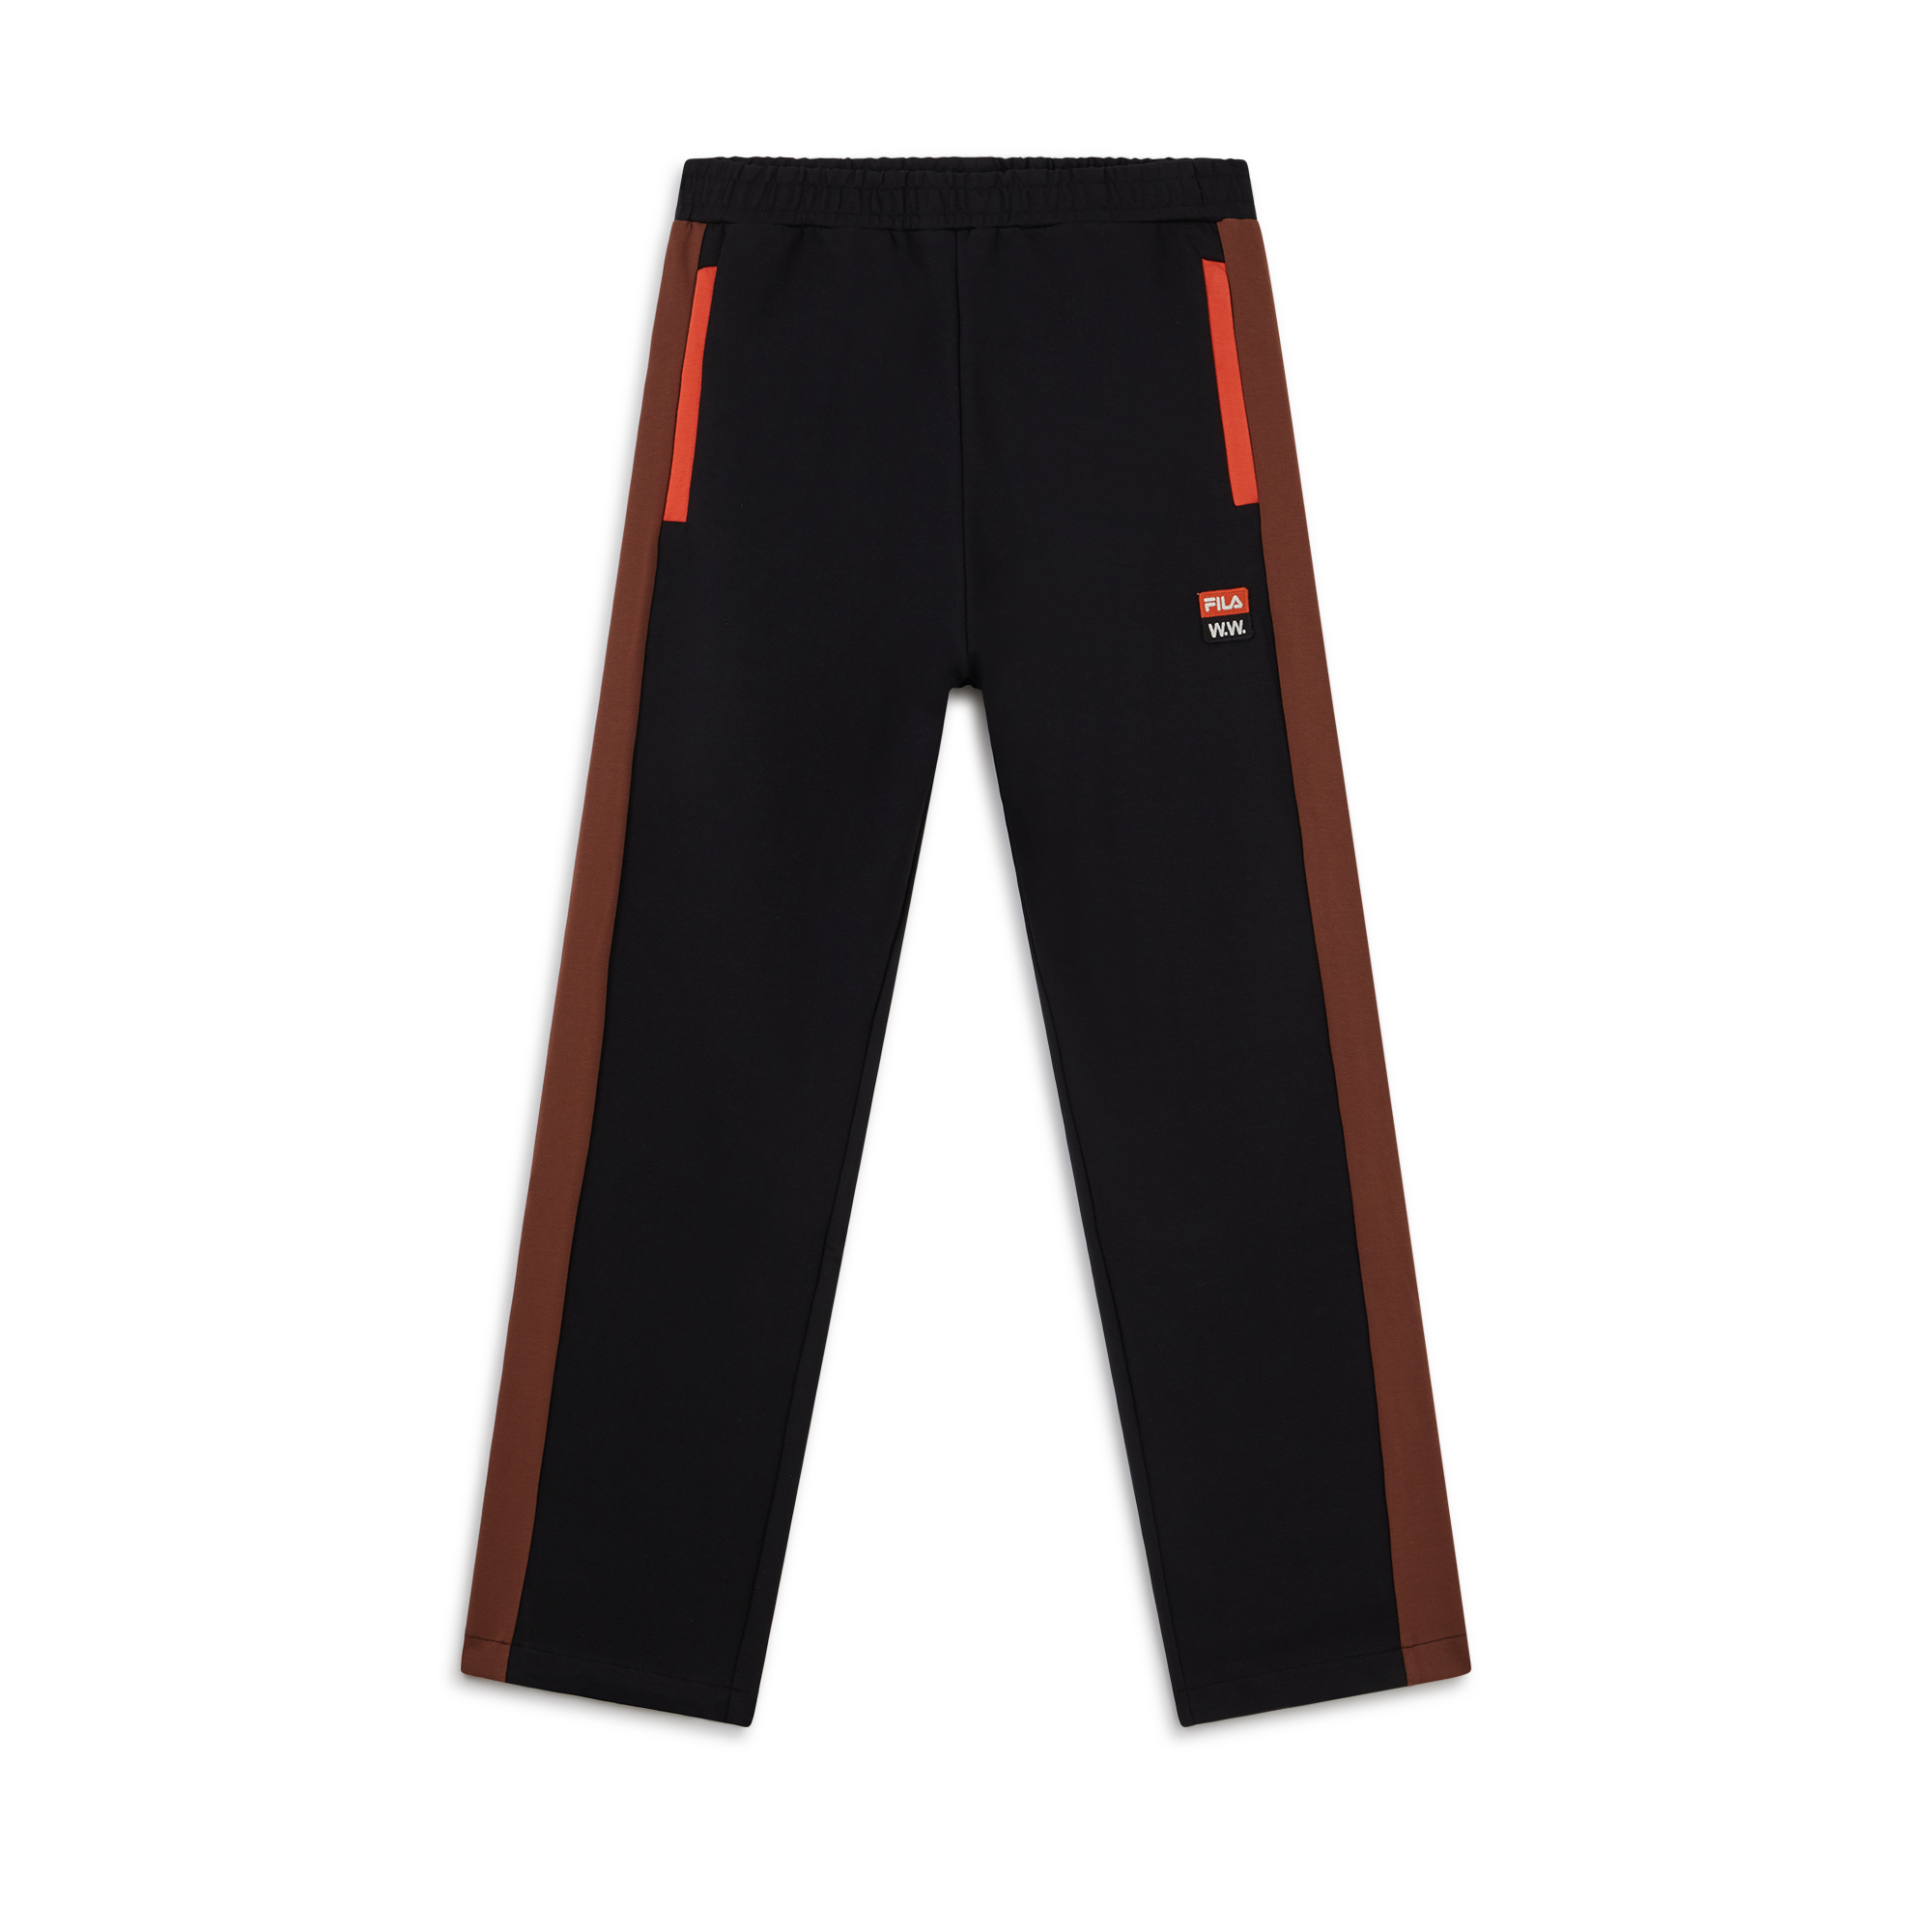 Pantalon Fila X Woodwood Noir/marron/orange